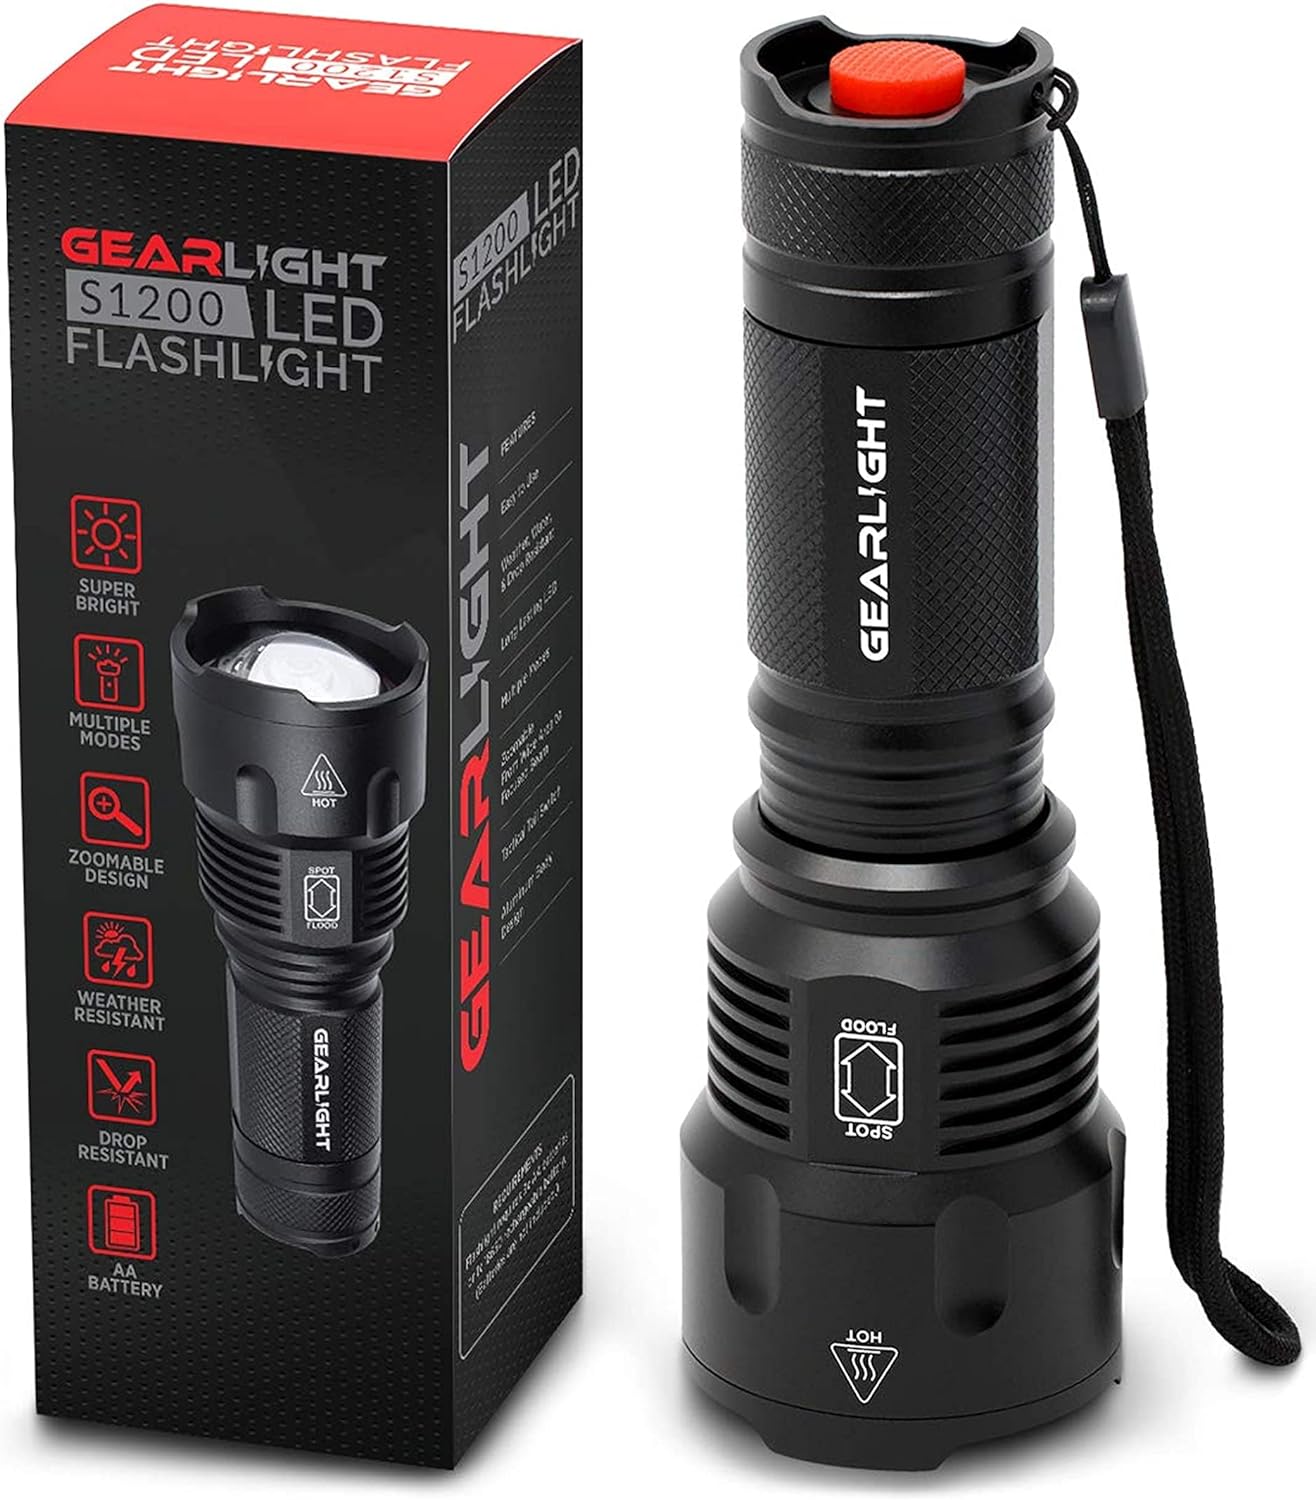 GearLight High-Powered LED Flashlight S1200